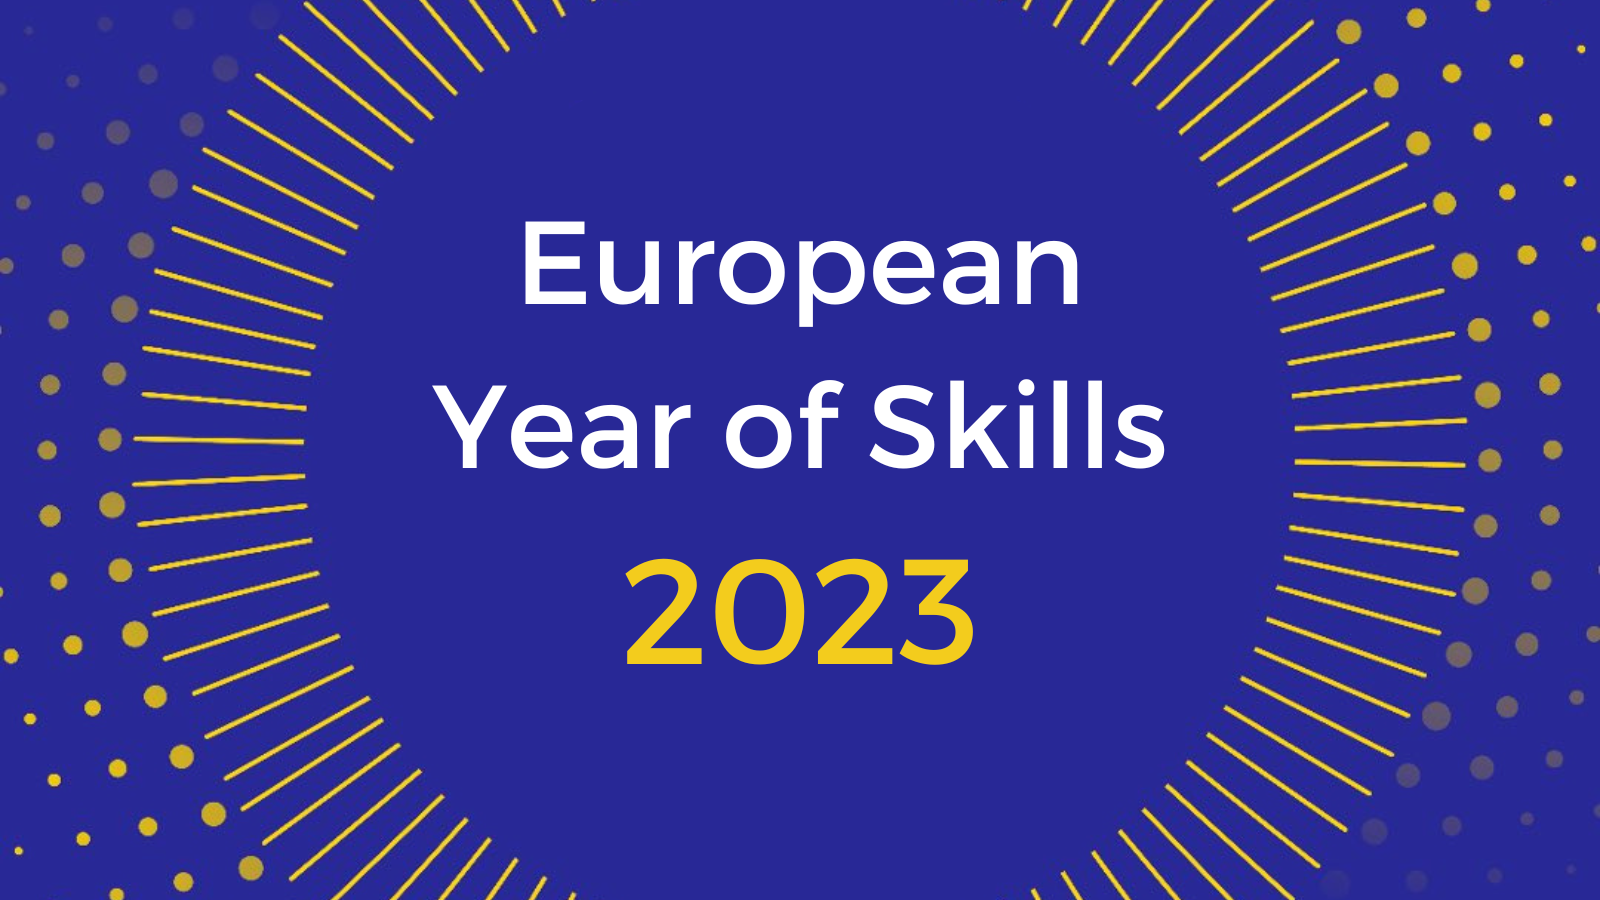 2023 announced as the European Year of Skills